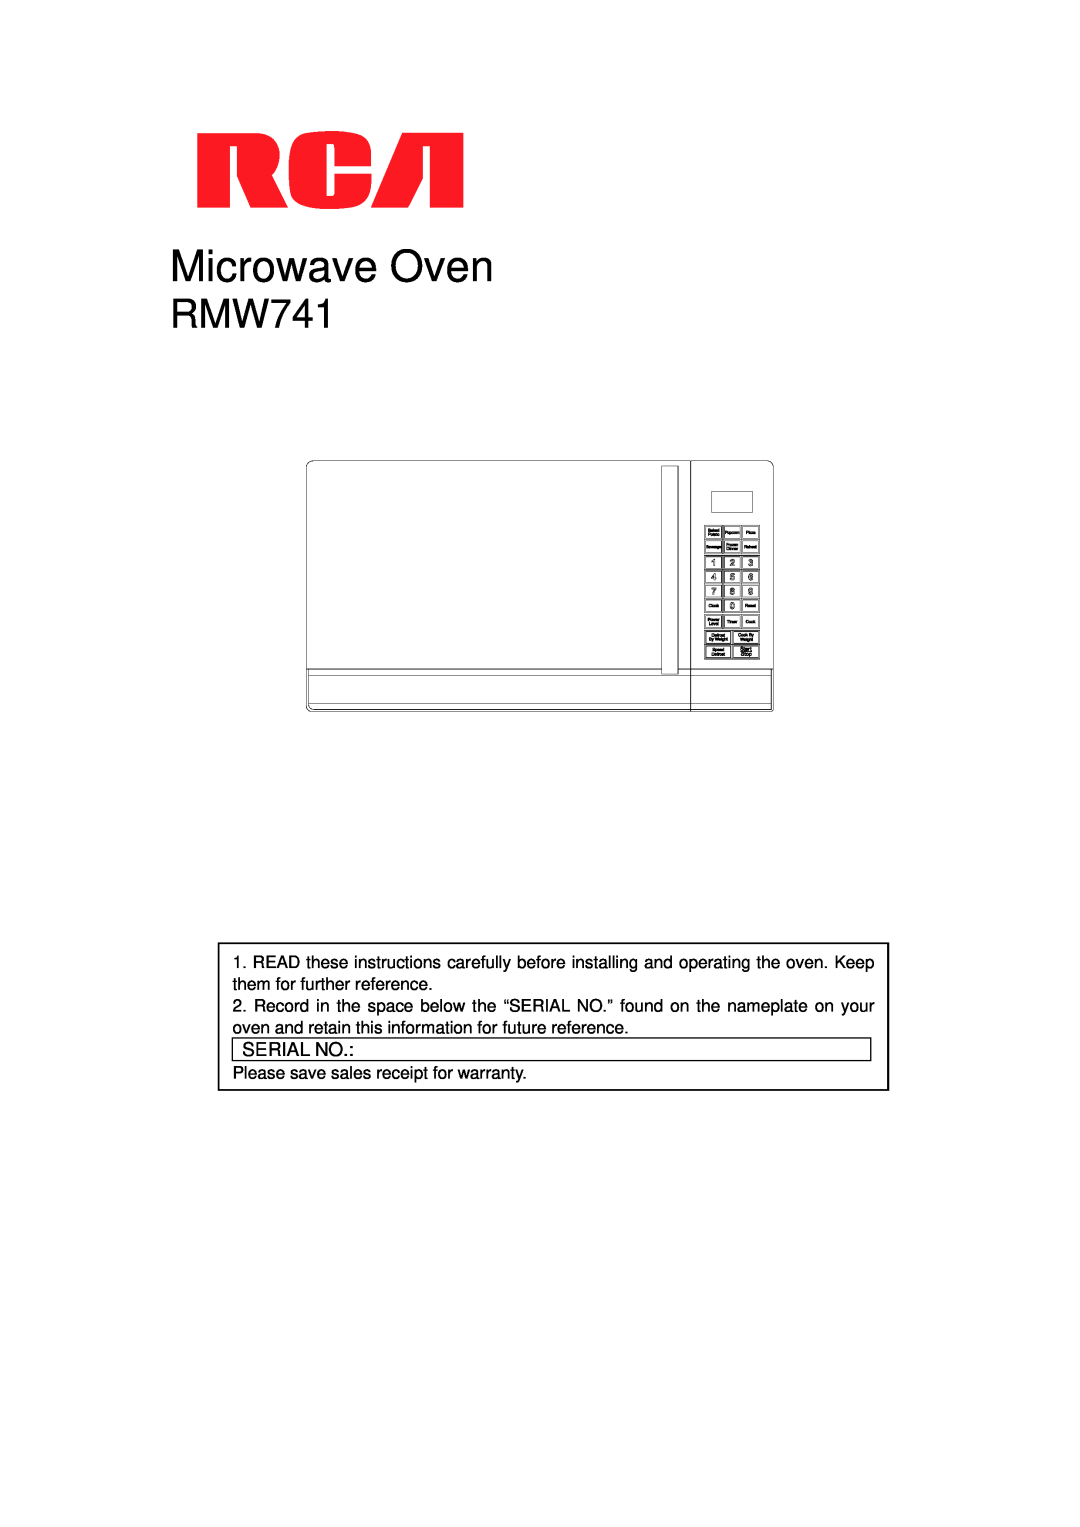 RCA RMW741 warranty Microwave Oven, Serial No 